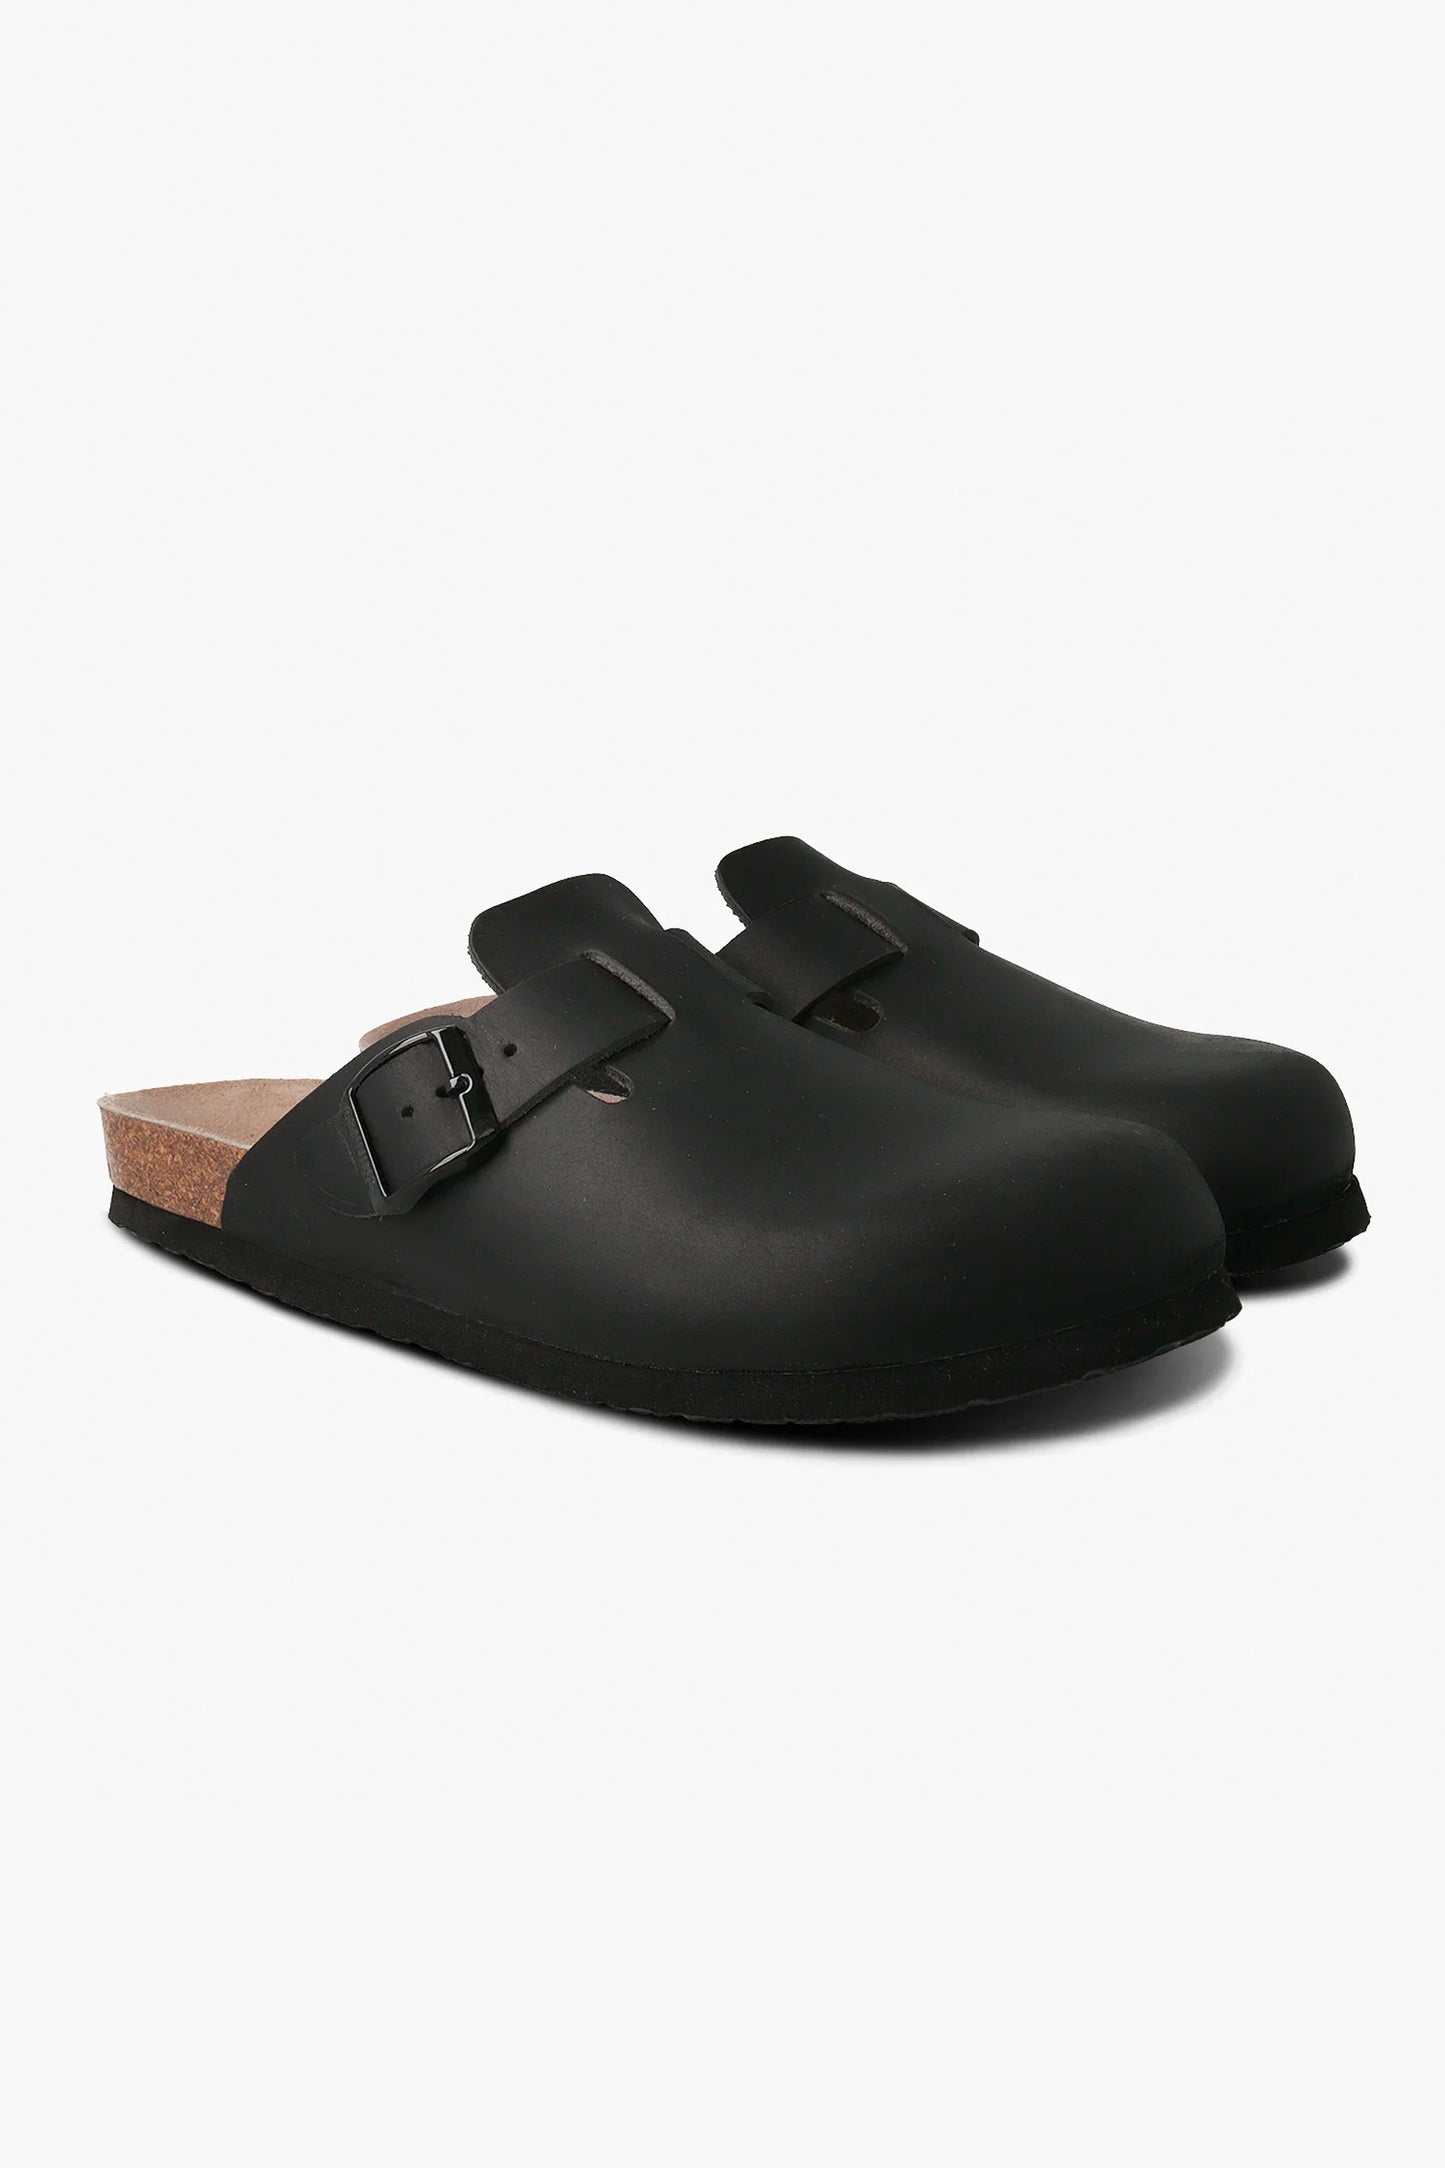 Pukas-Surf-Shop-Genuins-Footwear-RIva-Apure-Black